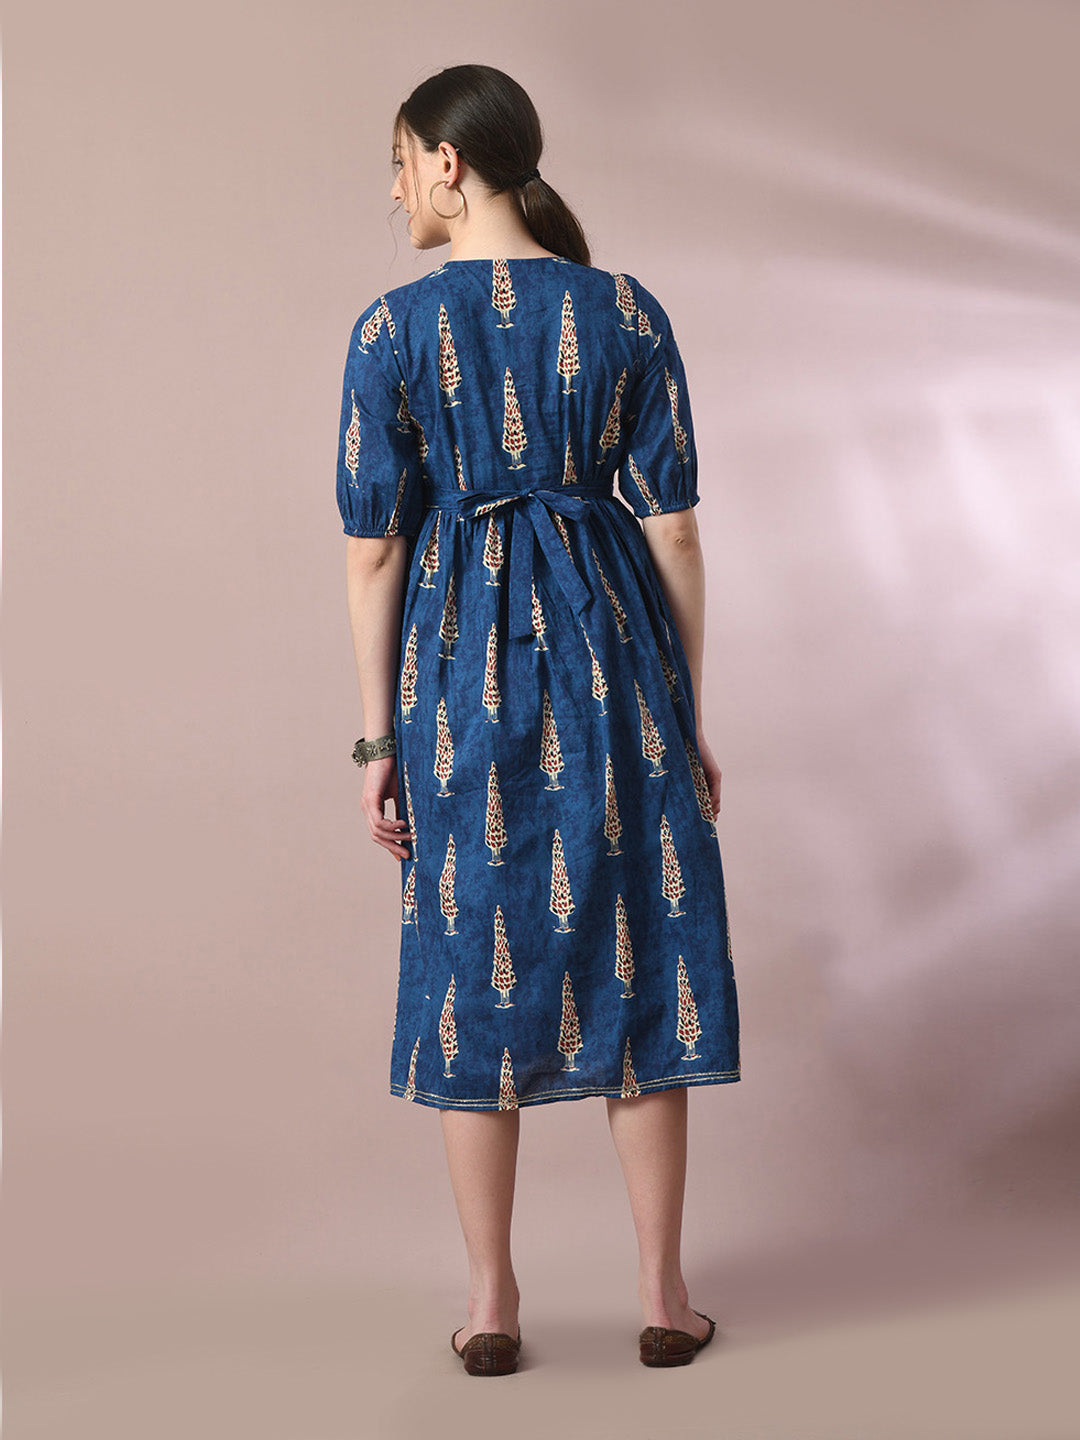 Women's  Blue Printed Cotton V-Neck Empire Party Dress  - Myshka